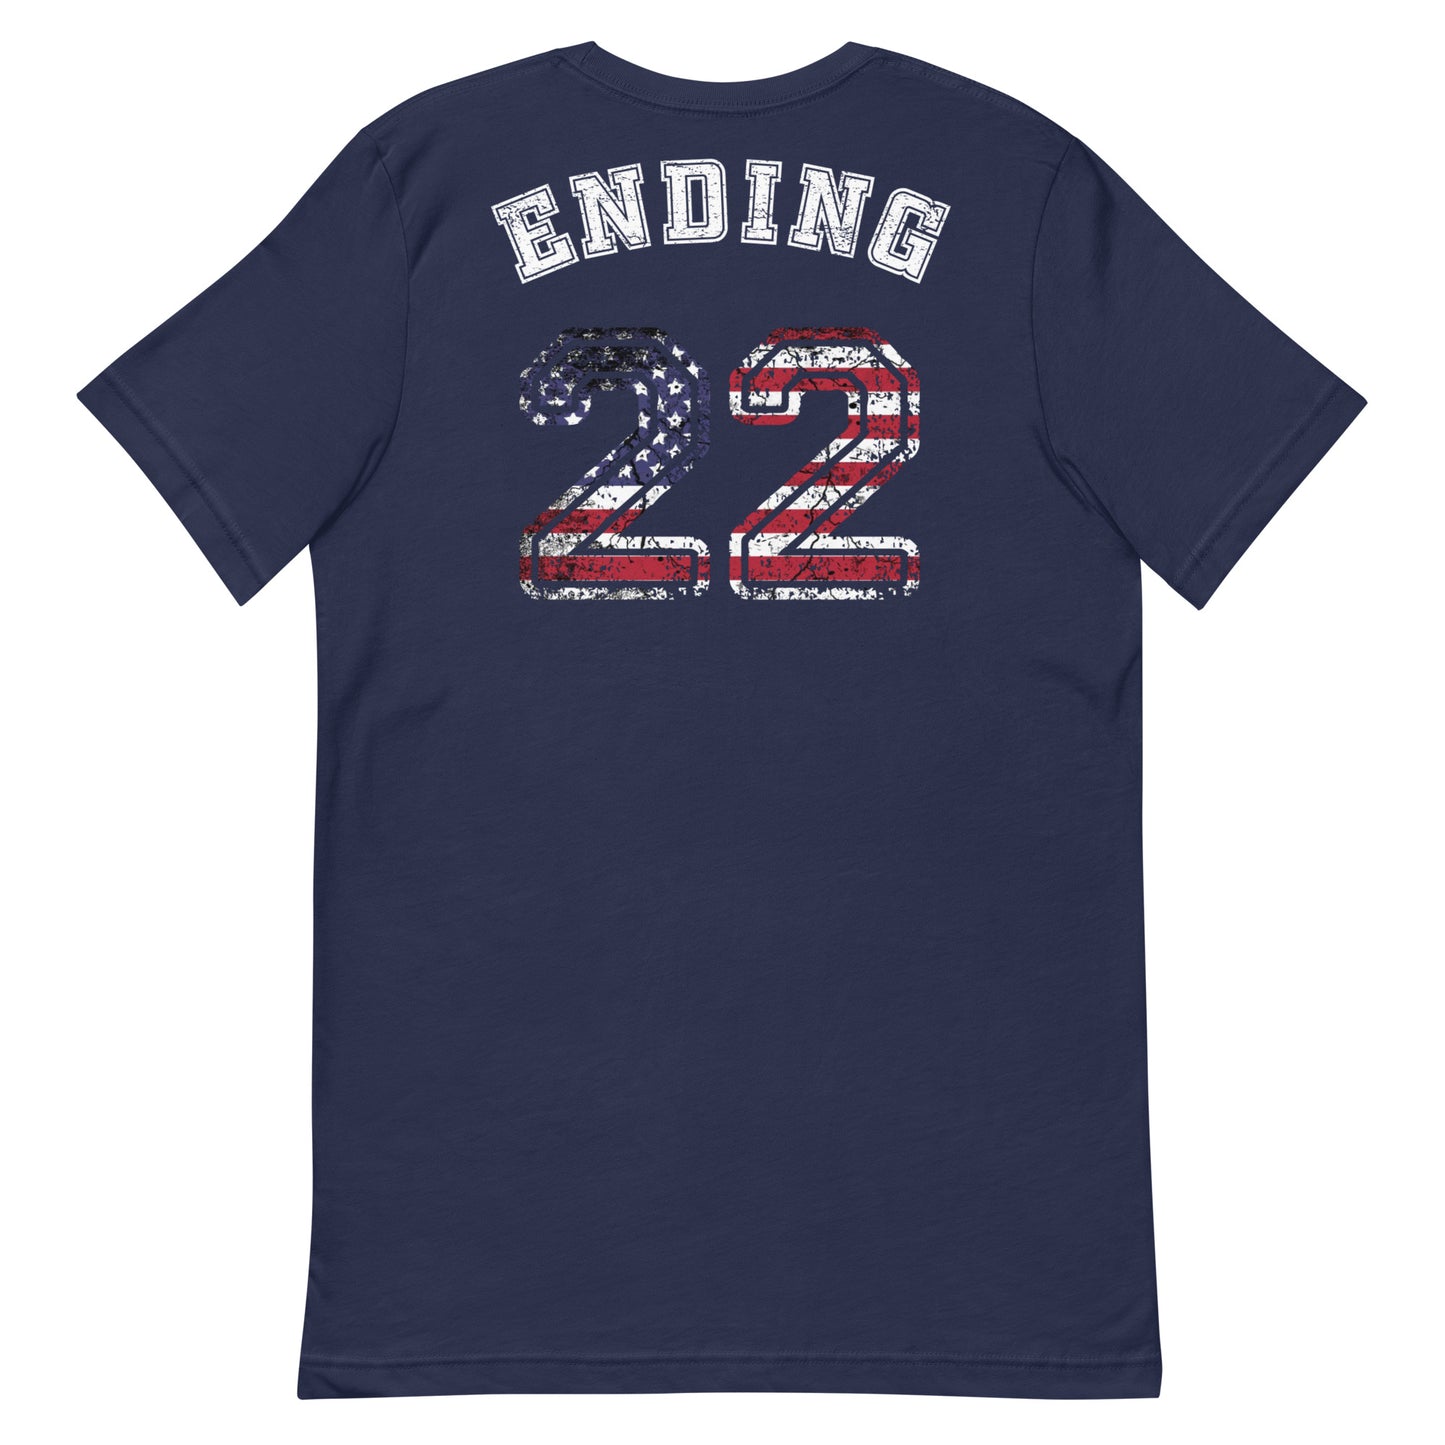 ENDING 22 Unsilencers T-Shirt Navy Back